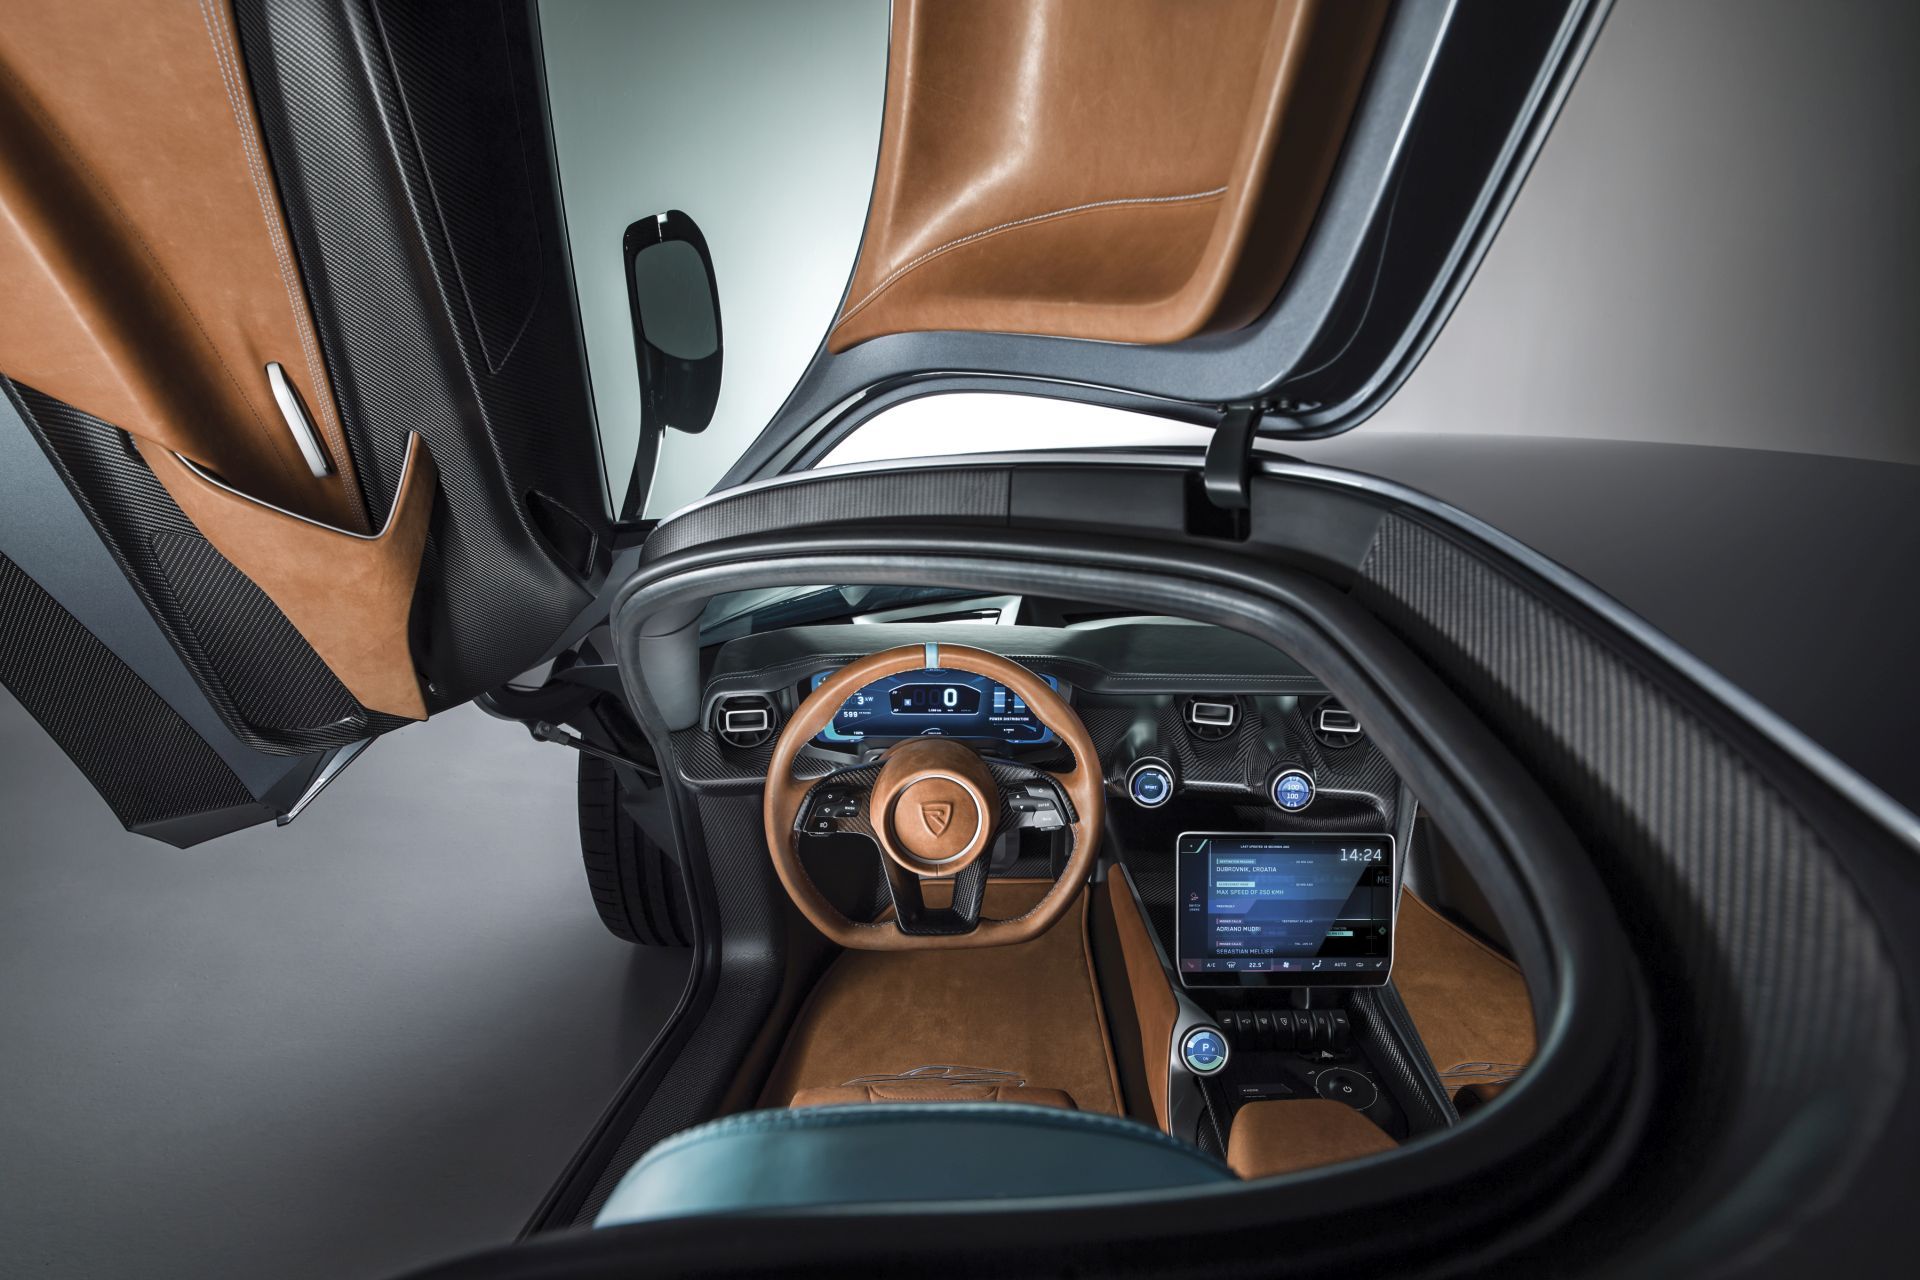 Automobili Pininfarina's four-motor, 1,900-hp EV hypercar will be called  Battista